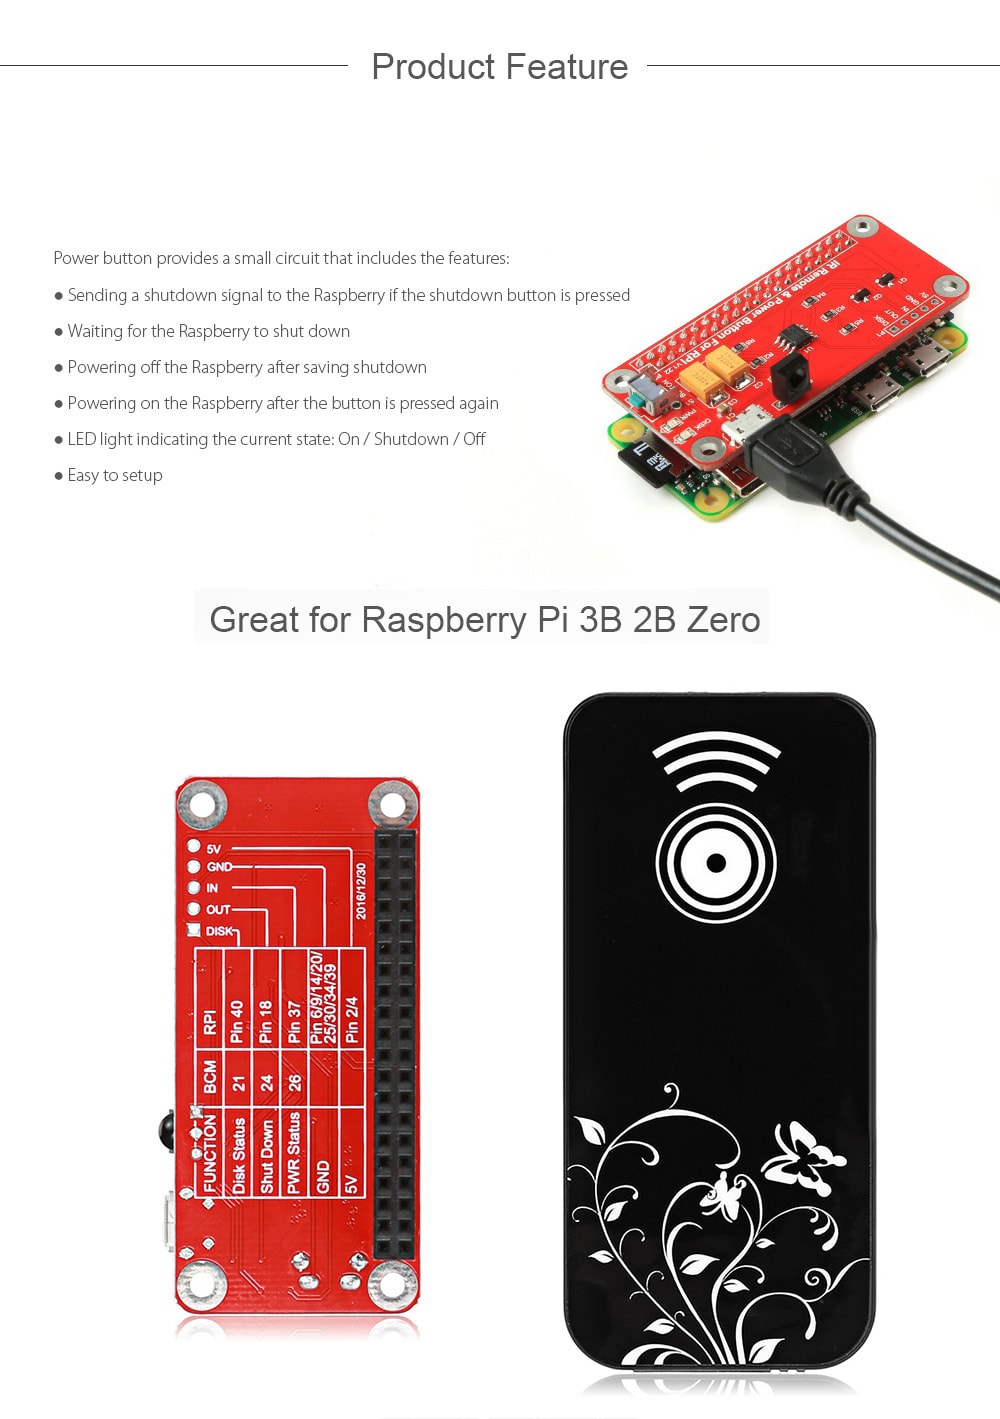 IR Remote Control Power Button Module for Raspberry Pi 3B 2B Zero- Red